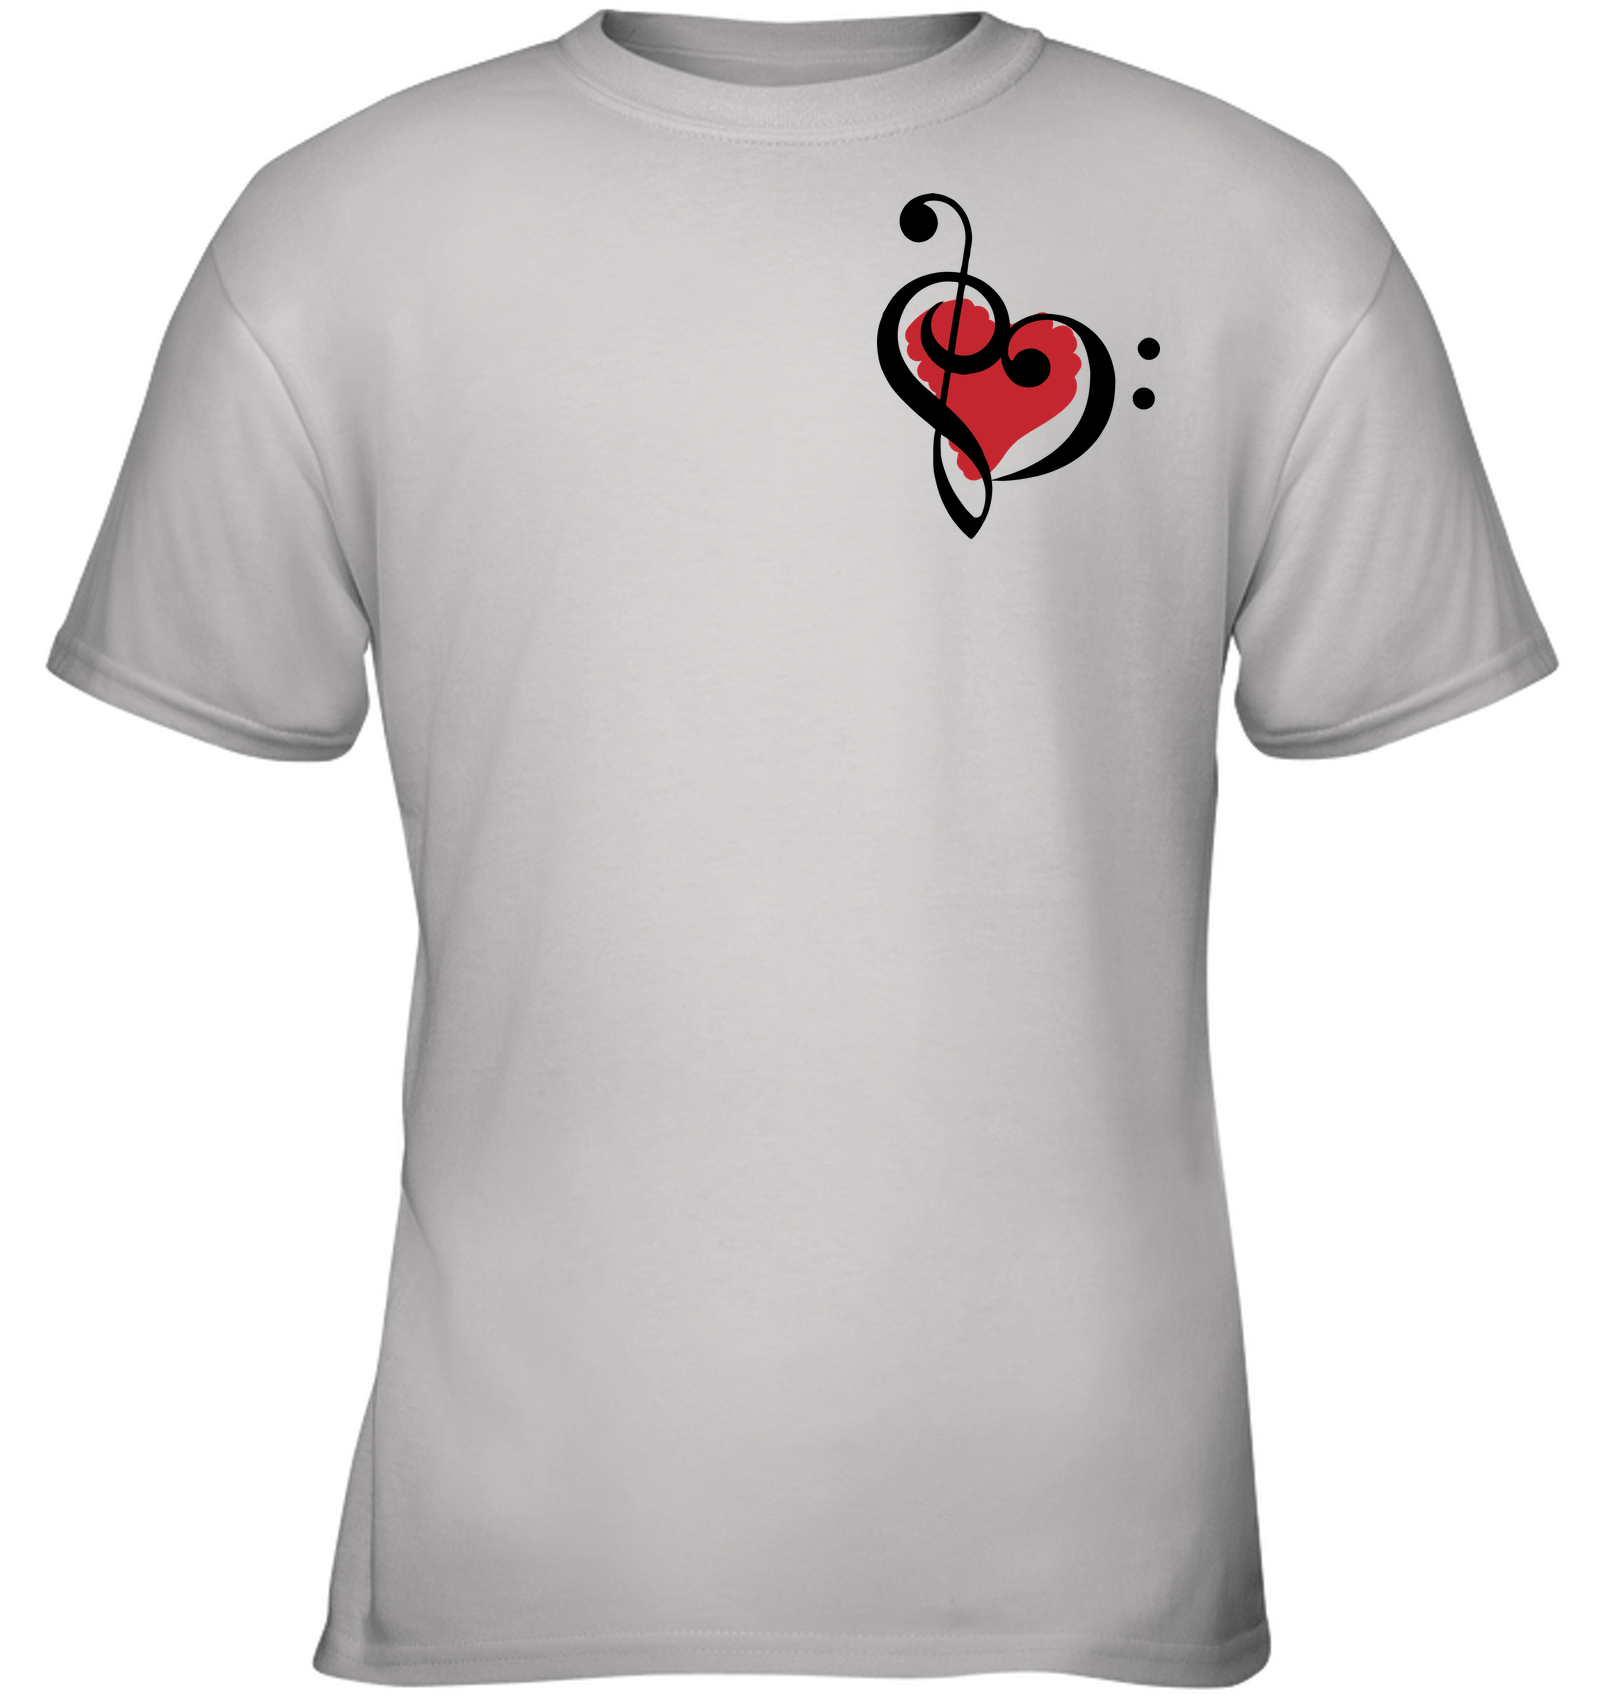 Treble Bass Red Heart (Pocket Size) - Gildan Youth Short Sleeve T-Shirt